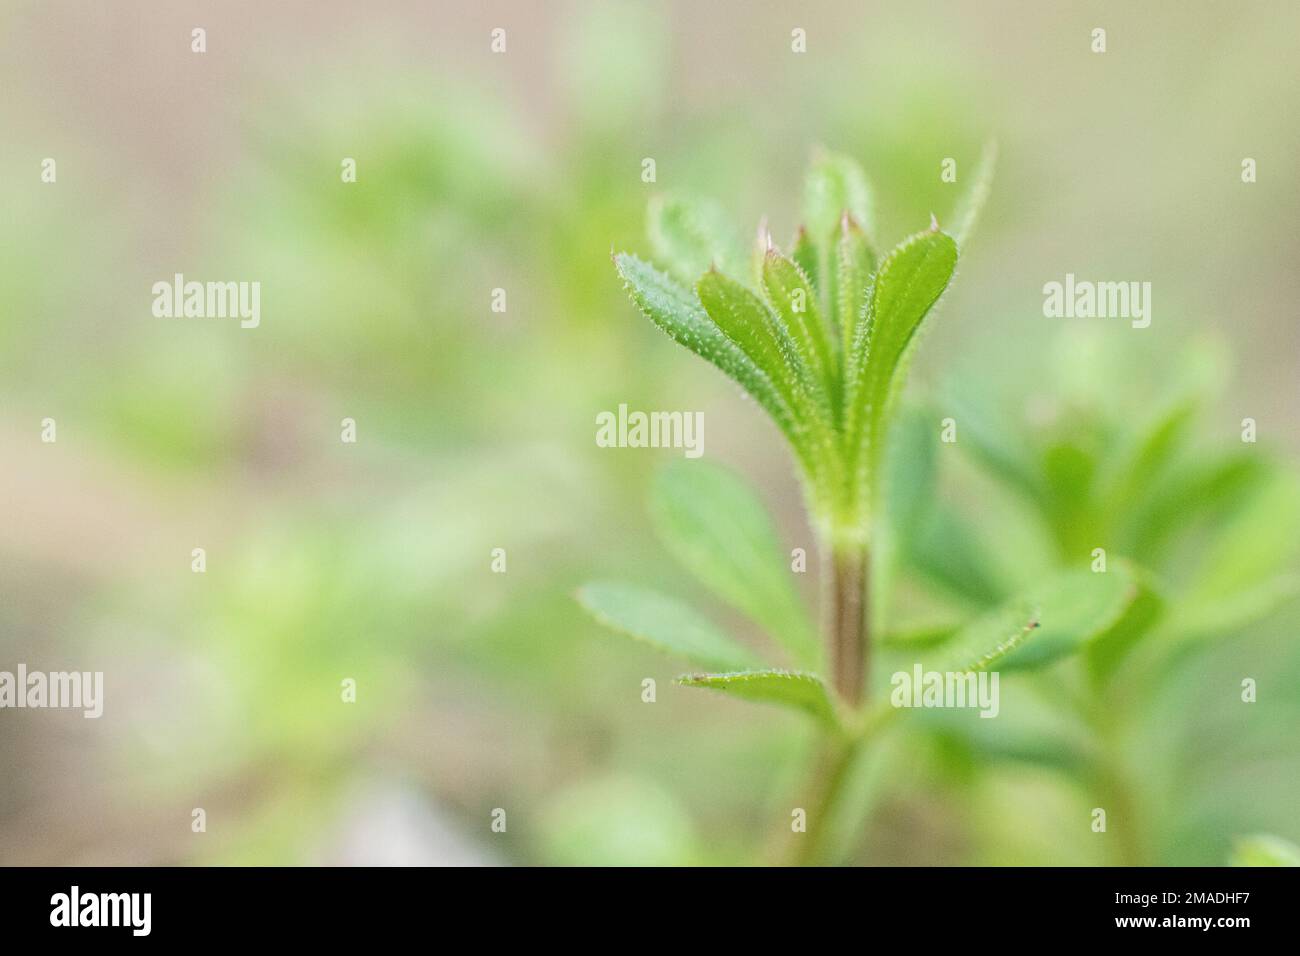 Galium aparine cleavers, catchweed, stickyweed, robin-run-the-hedge, sticky willy, sticky willow, stickyjack, stickeljack, and grip grass use in Stock Photo